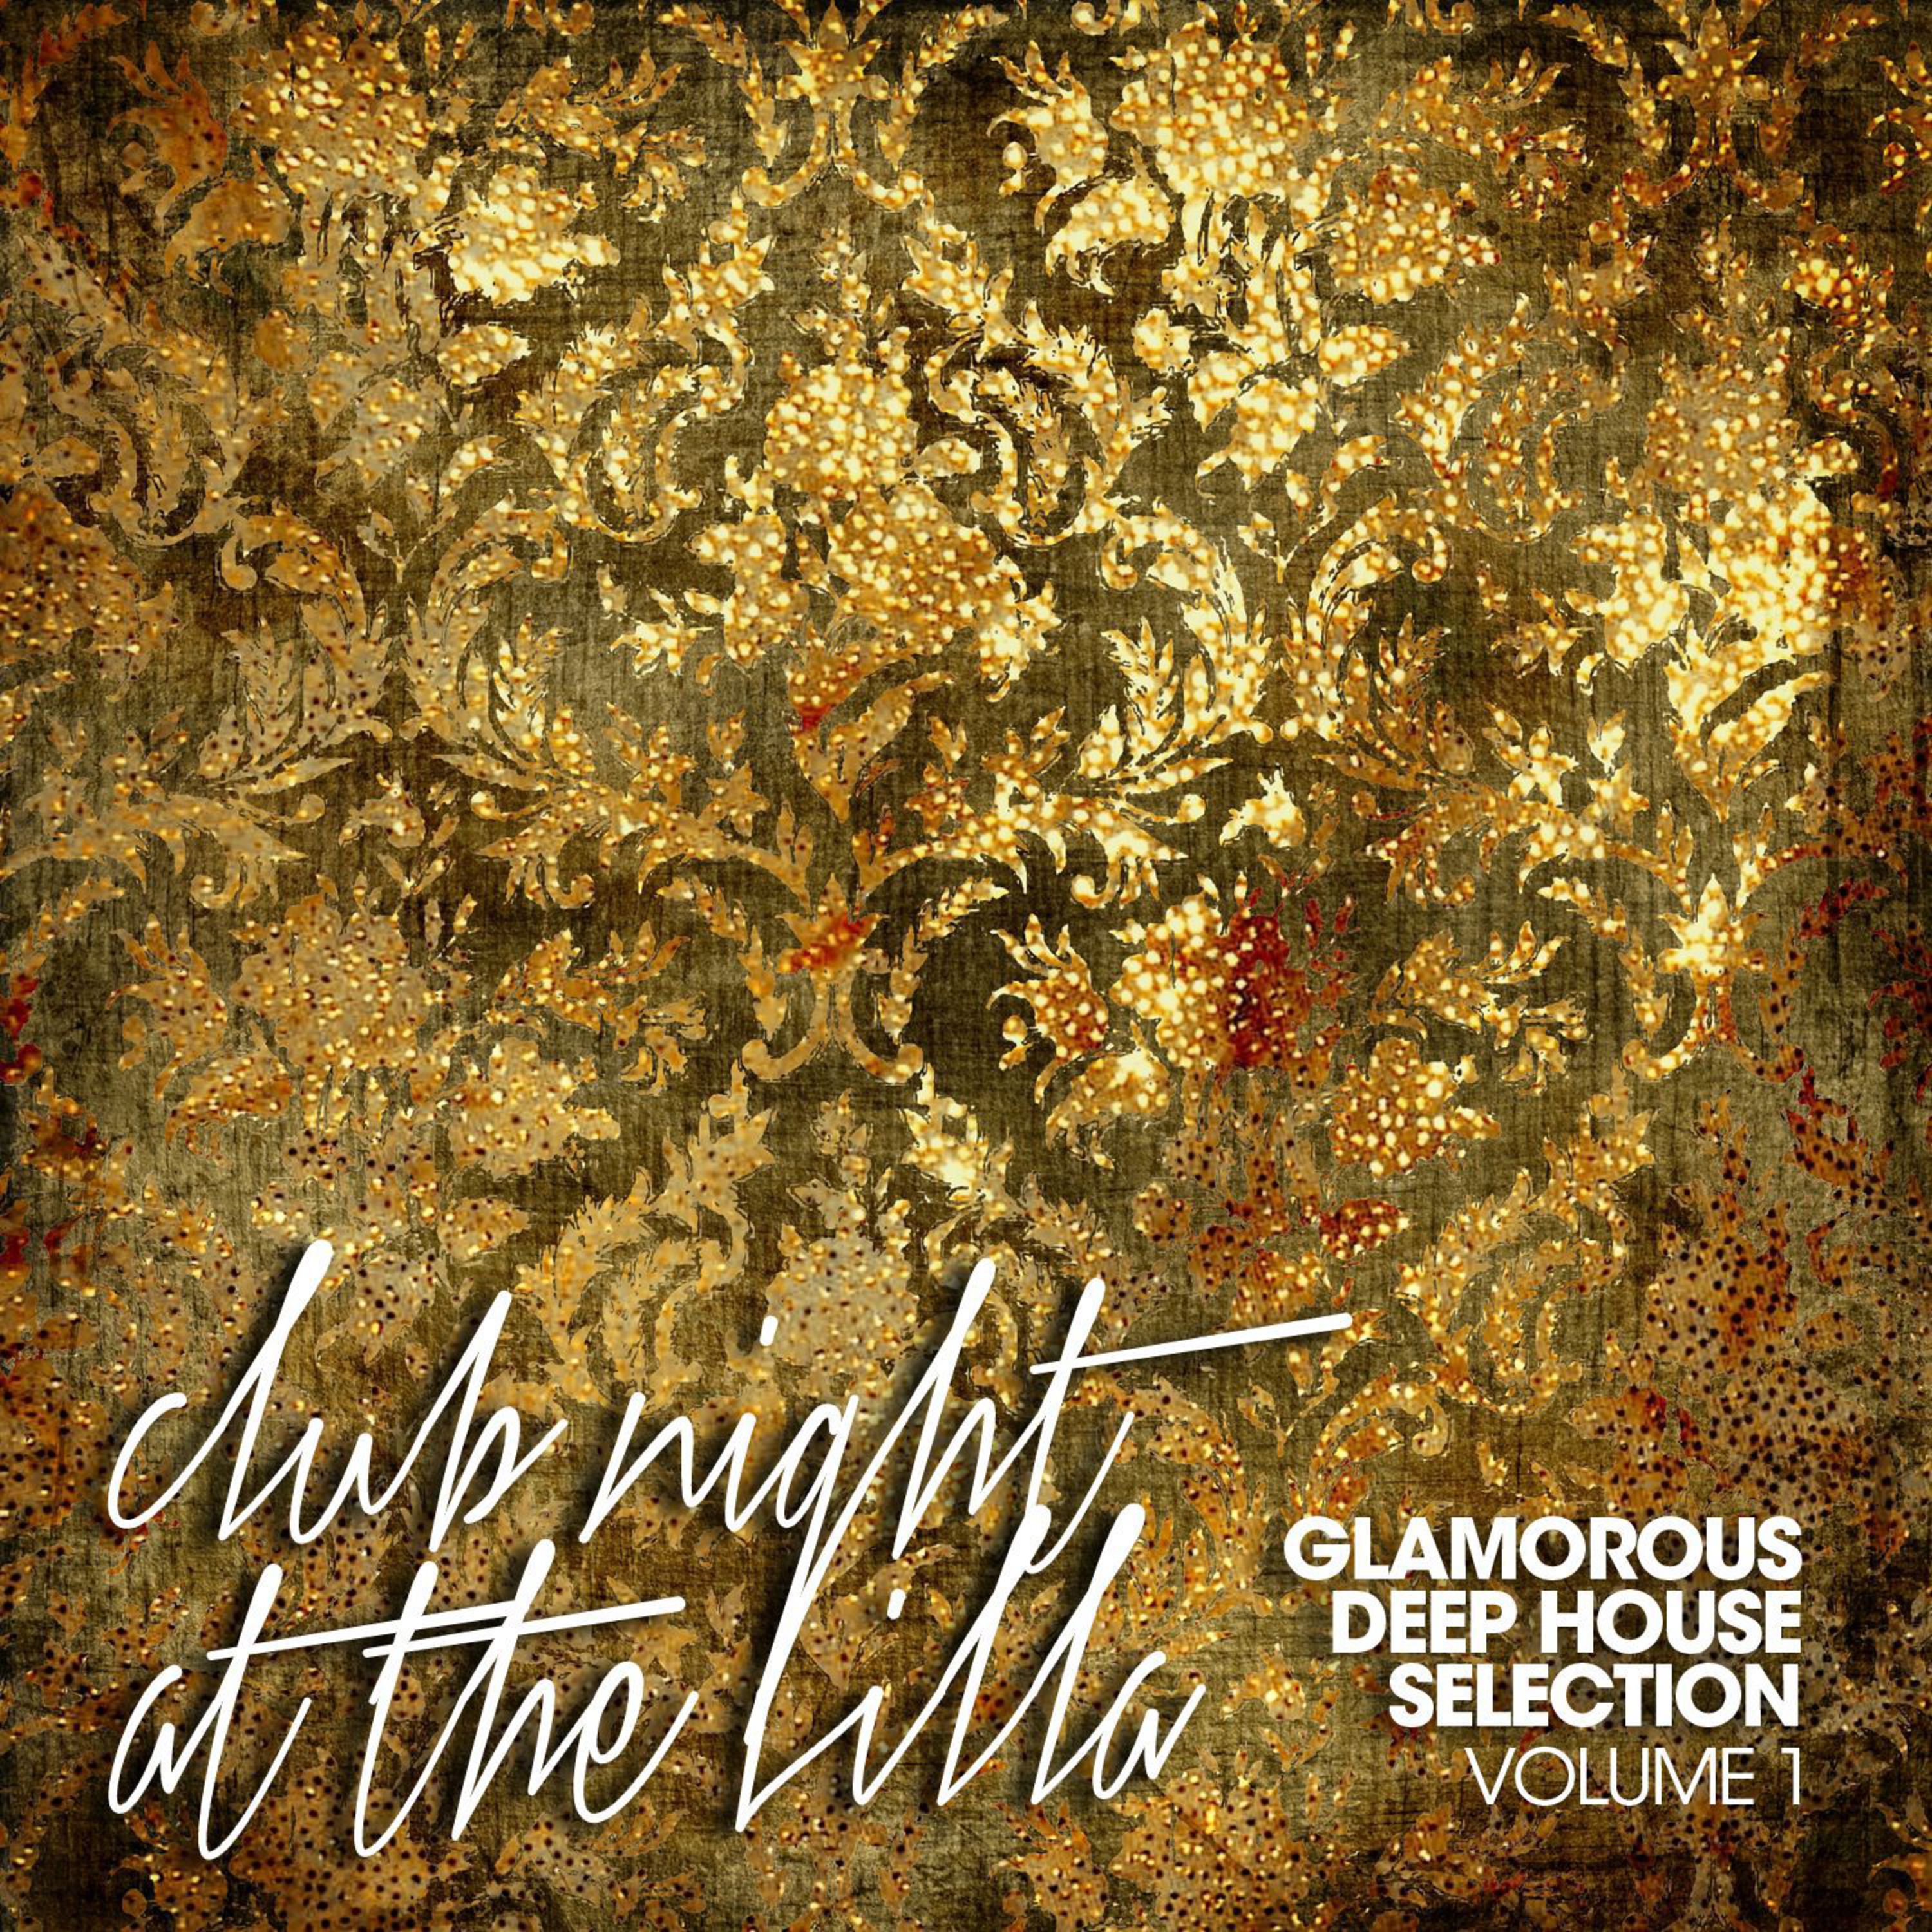 Club Night at The Villa Vol. 1 (Glamorous Deep House Selection)